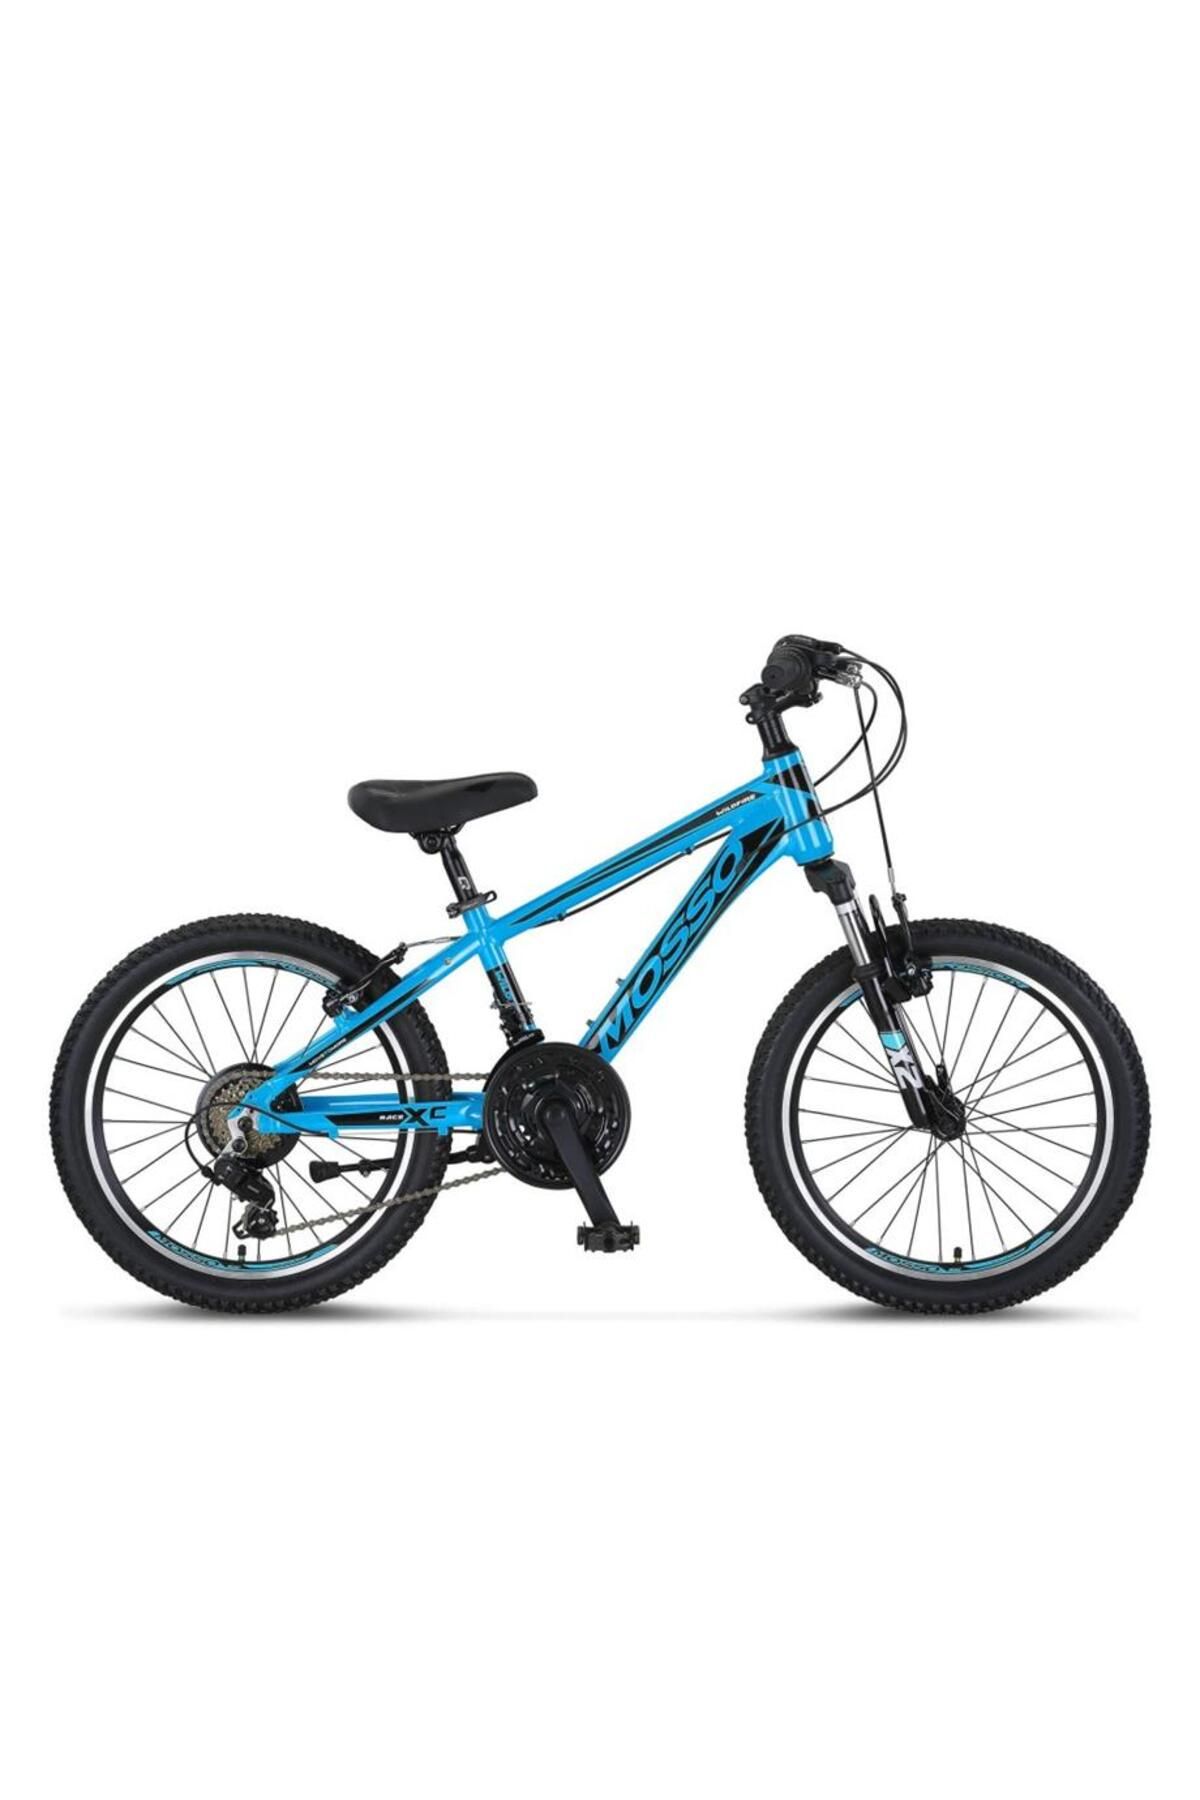 Mosso Wıldfıre M-20-v Erkek Çocuk Bisikleti 280h V 20 Jant 18 Vites Mavi Siyah